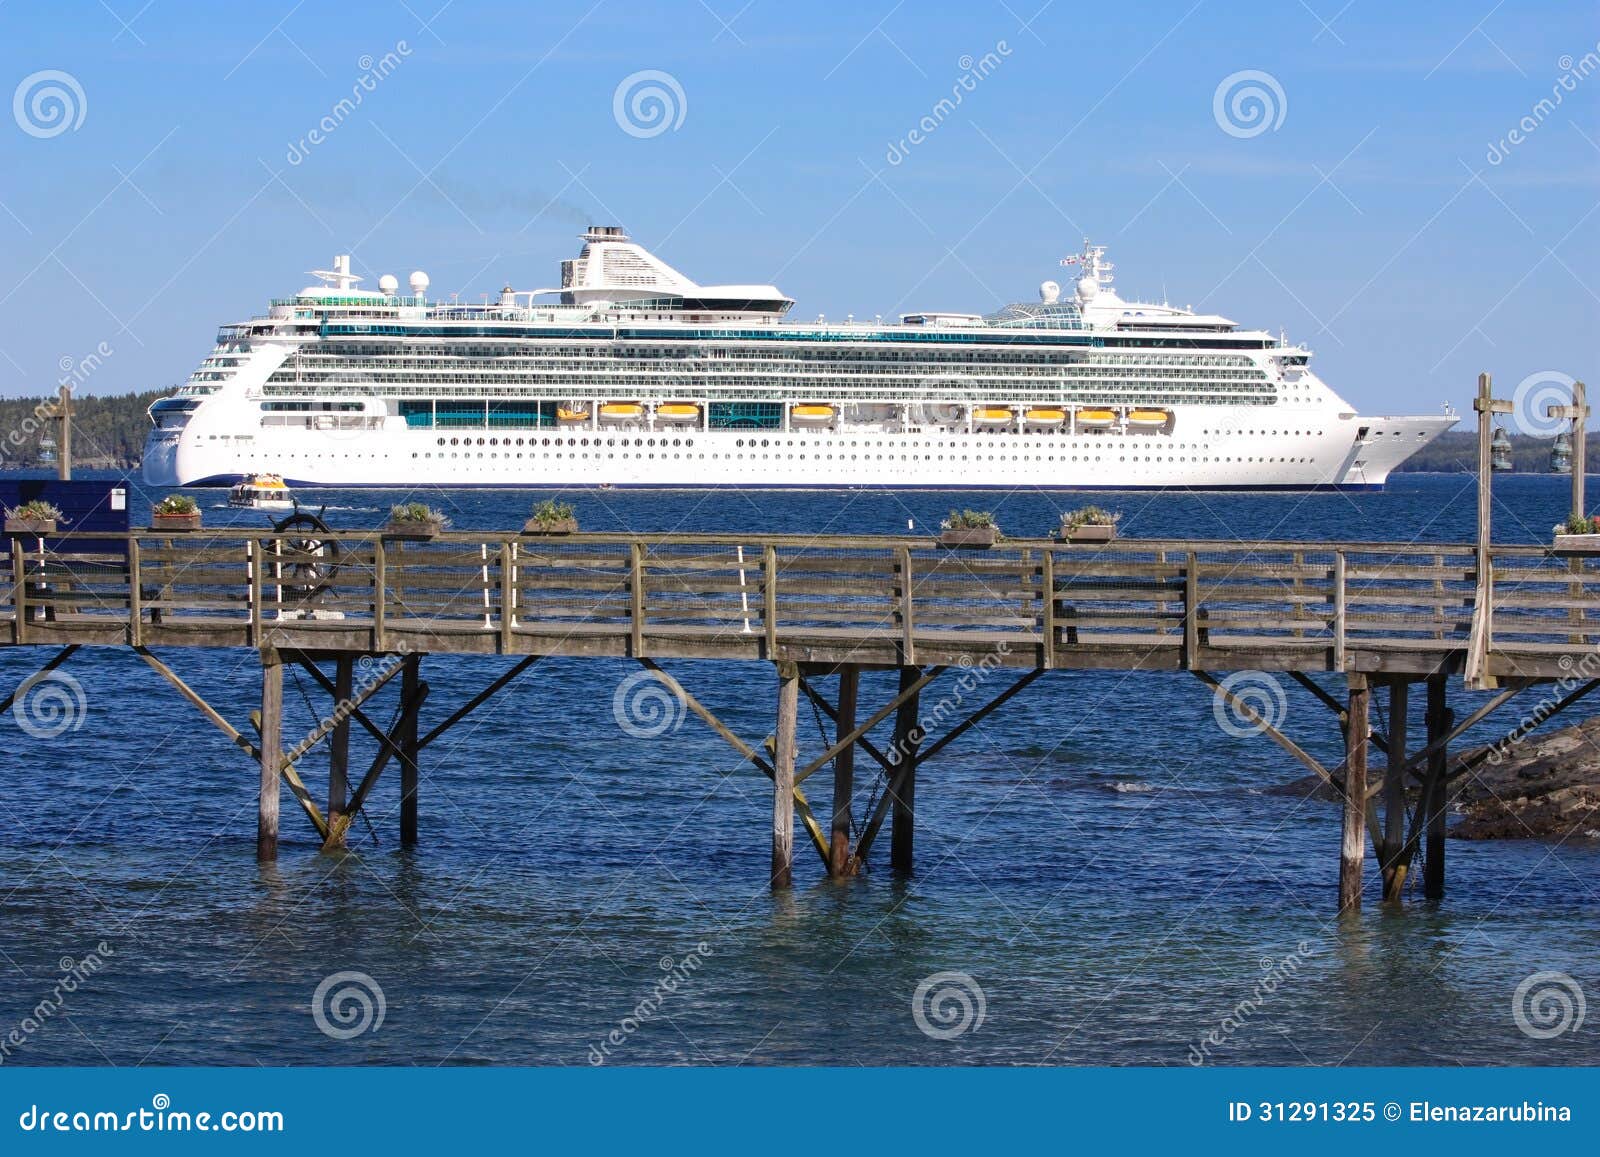 cruise ship docked in bar harbor